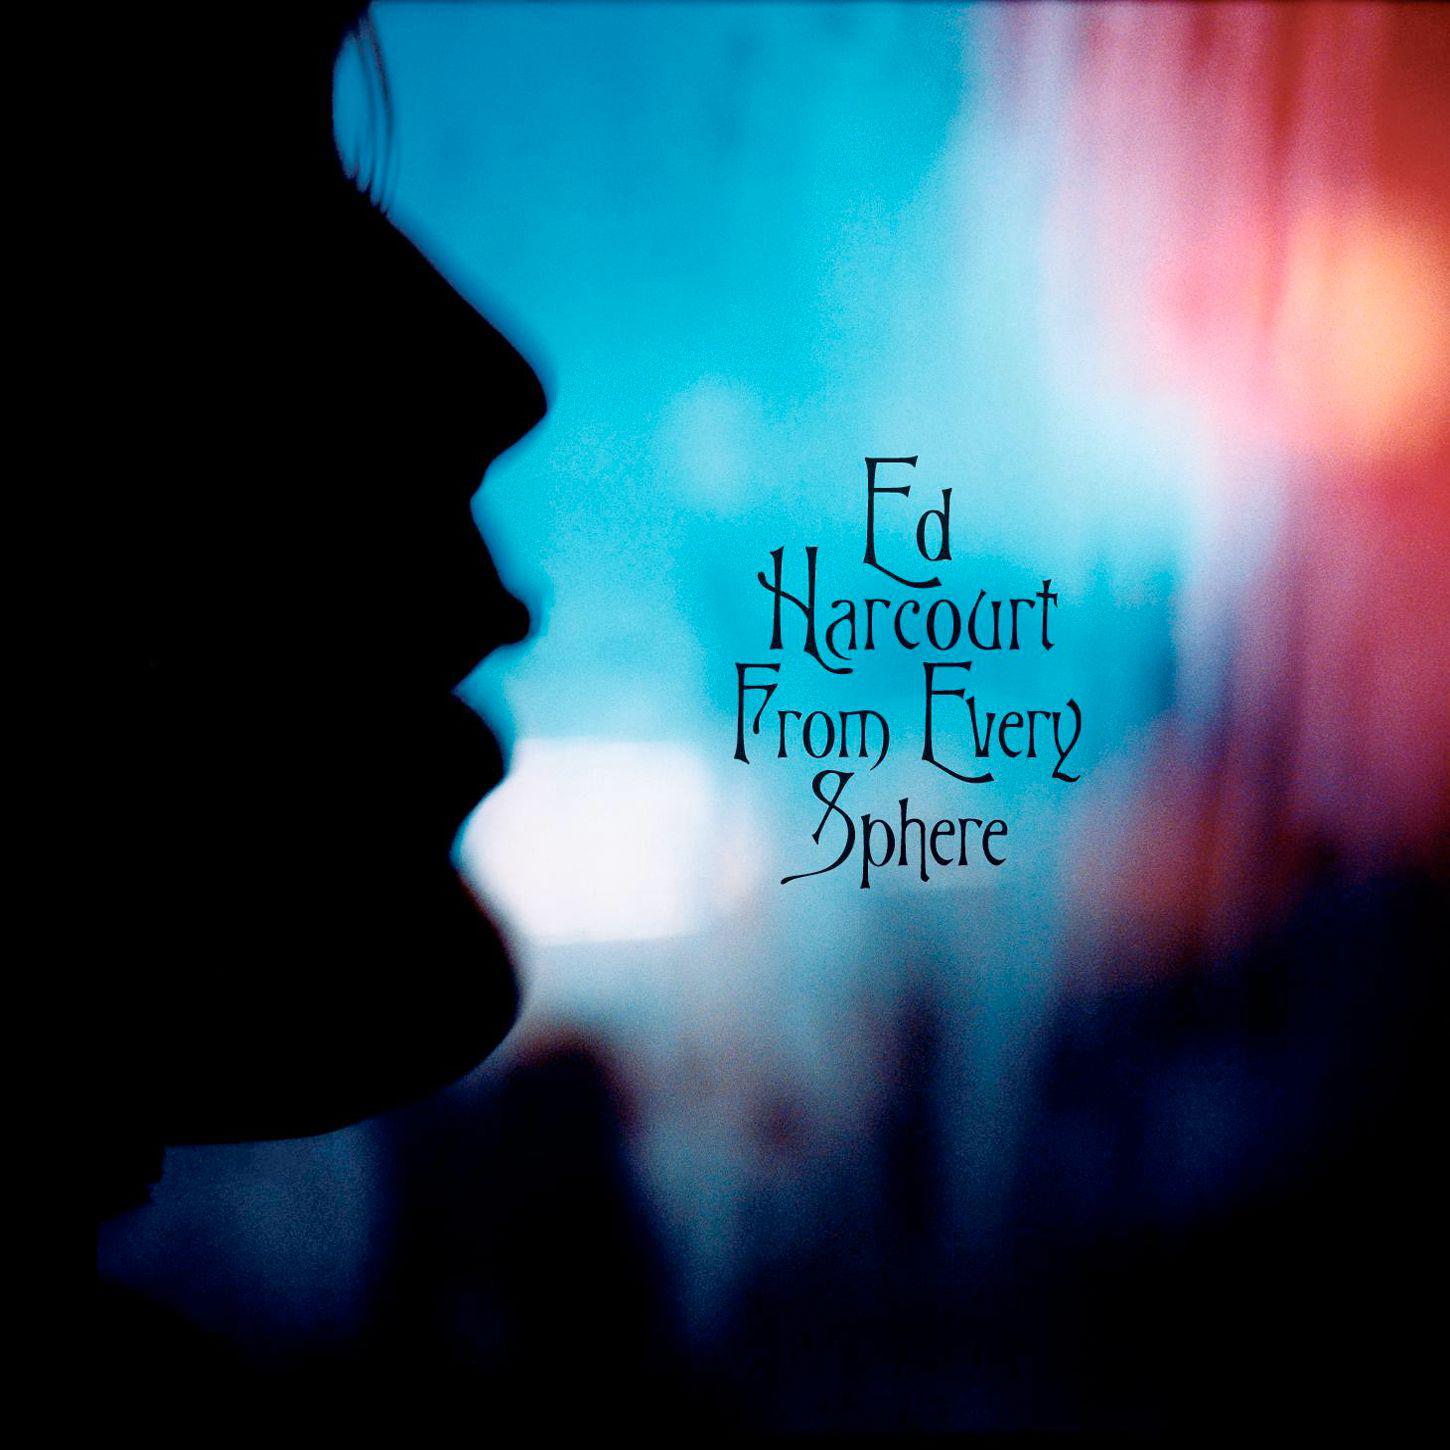 Ed Harcourt - Fireflies Take Flight